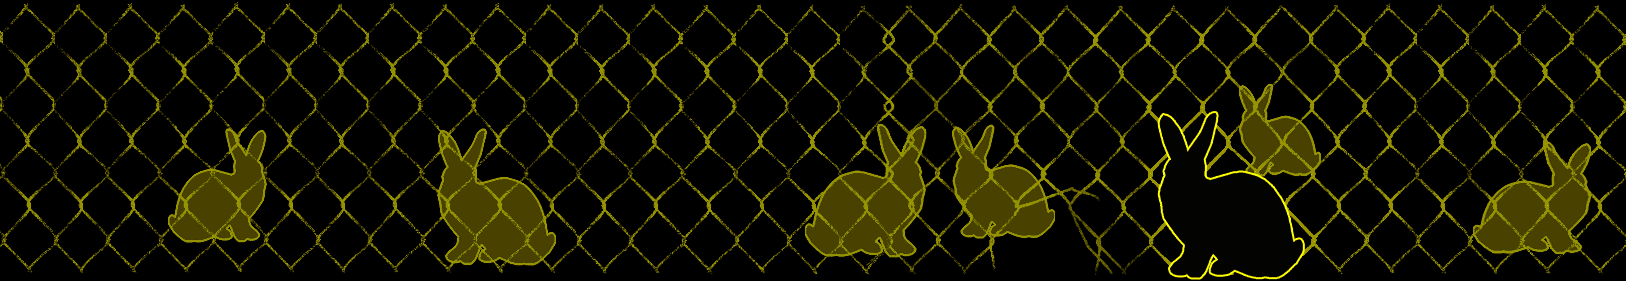 tplimg:blackrabbit:rabbitprooffence_by_14.gif